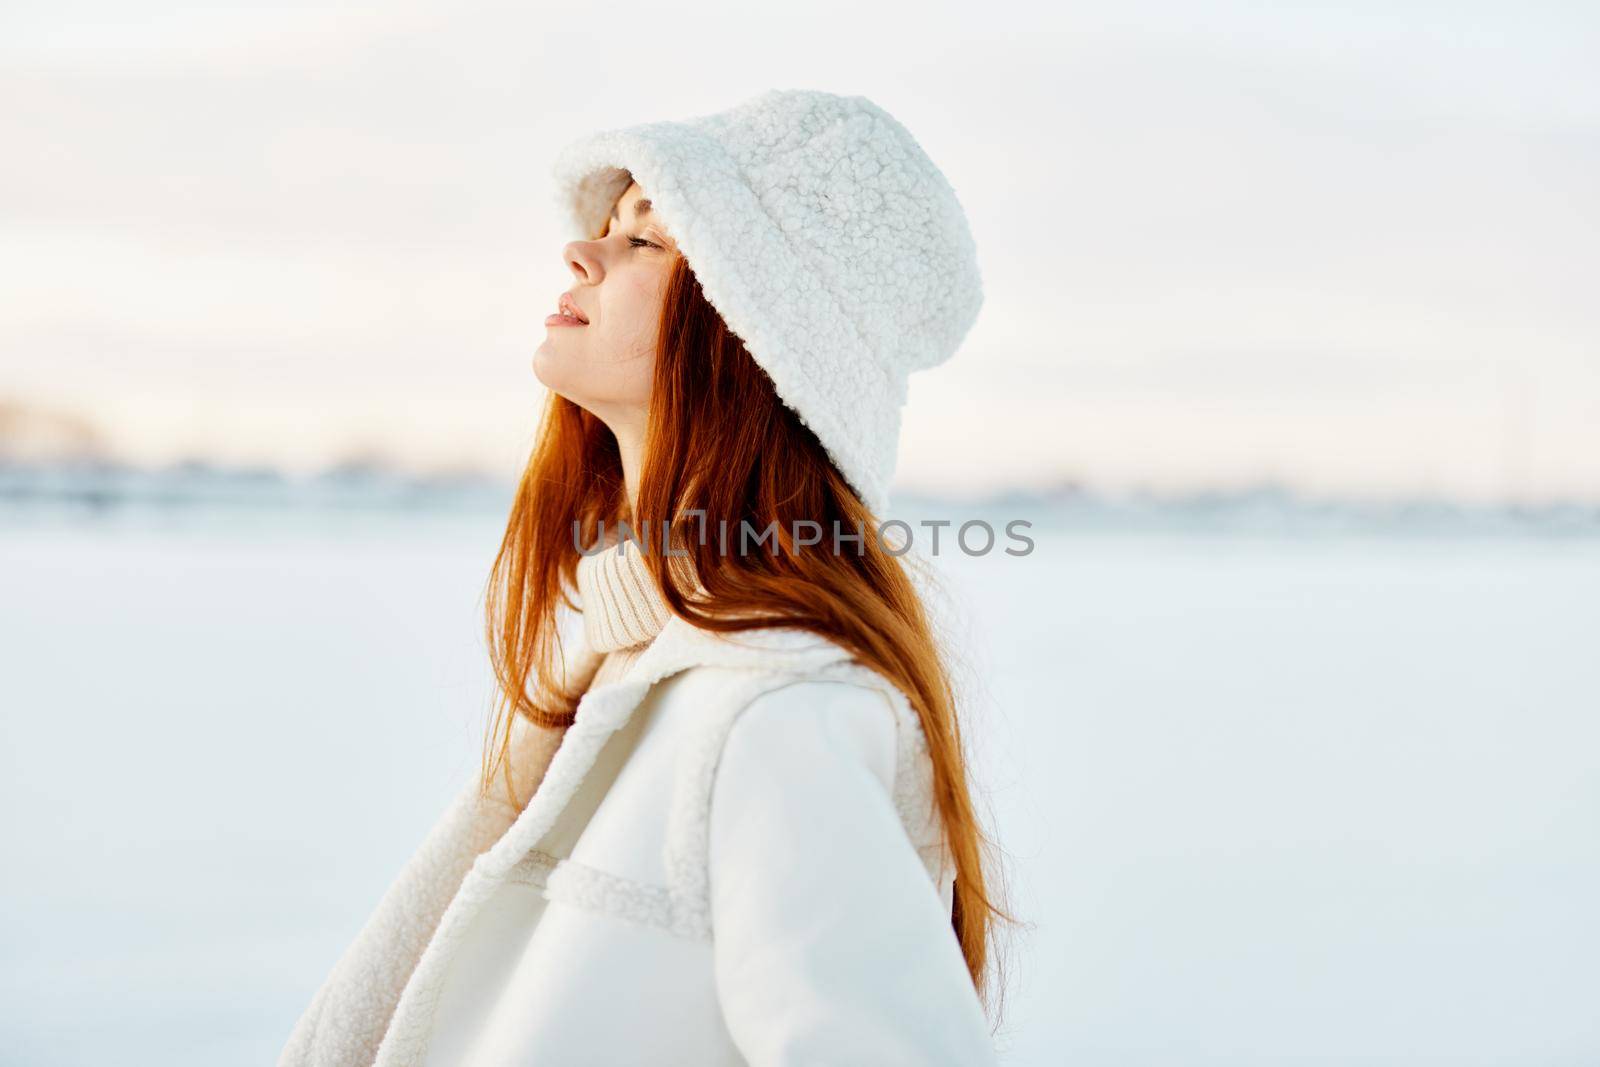 pretty woman smile Winter mood walk white coat Fresh air. High quality photo